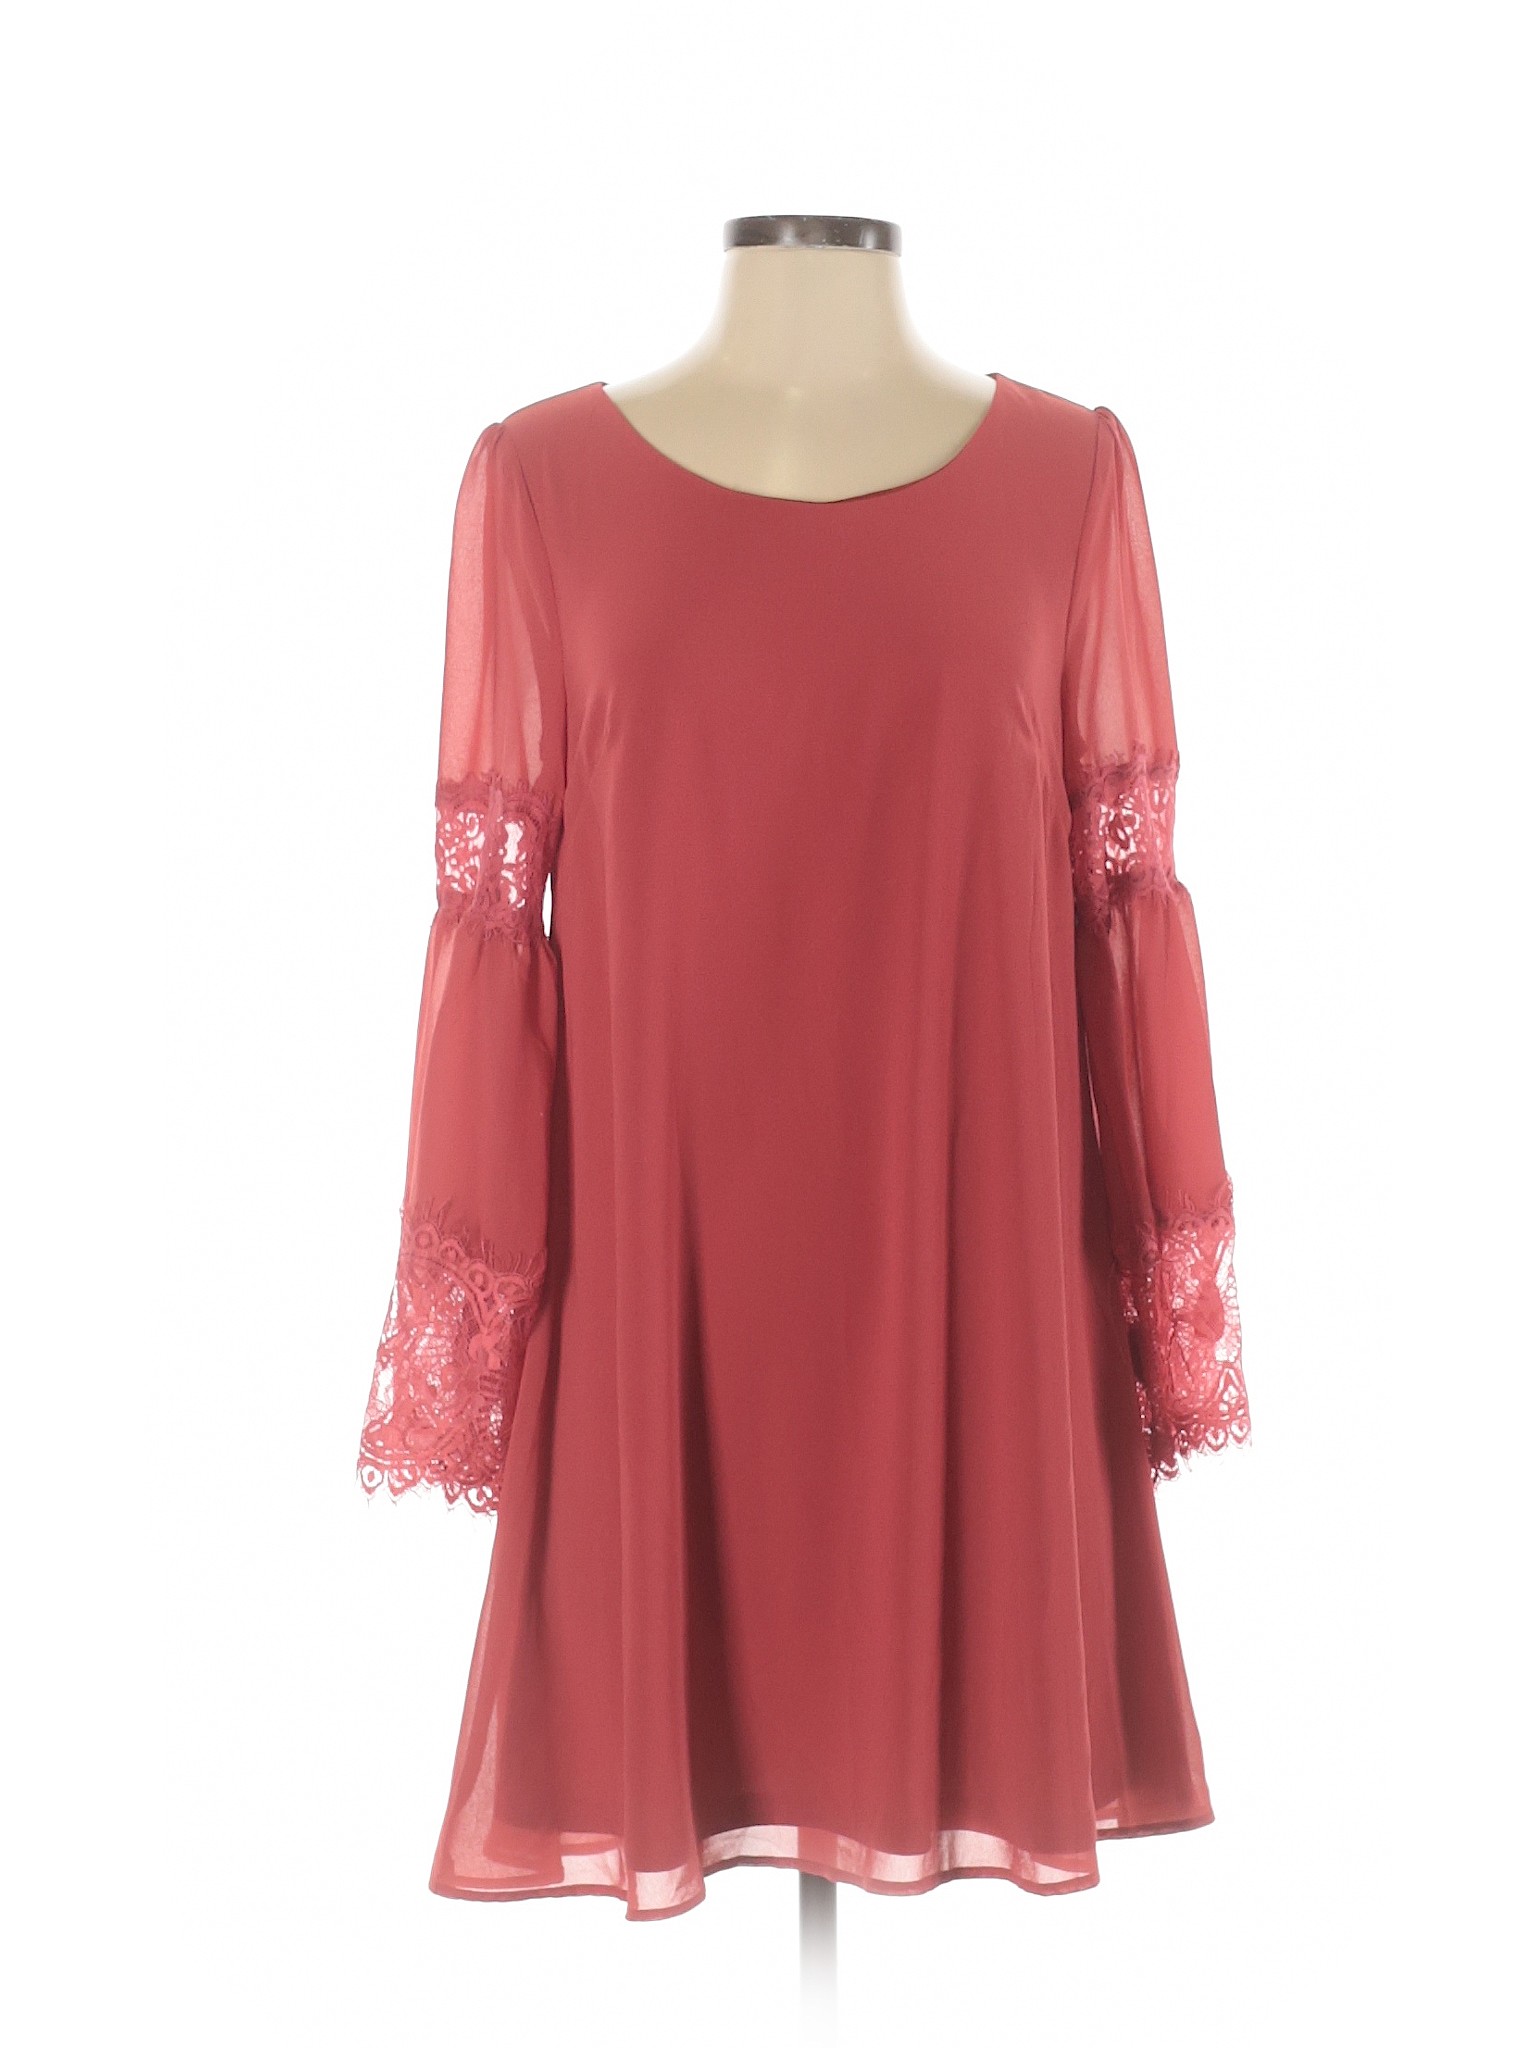 Entro Women Pink Casual Dress S | eBay